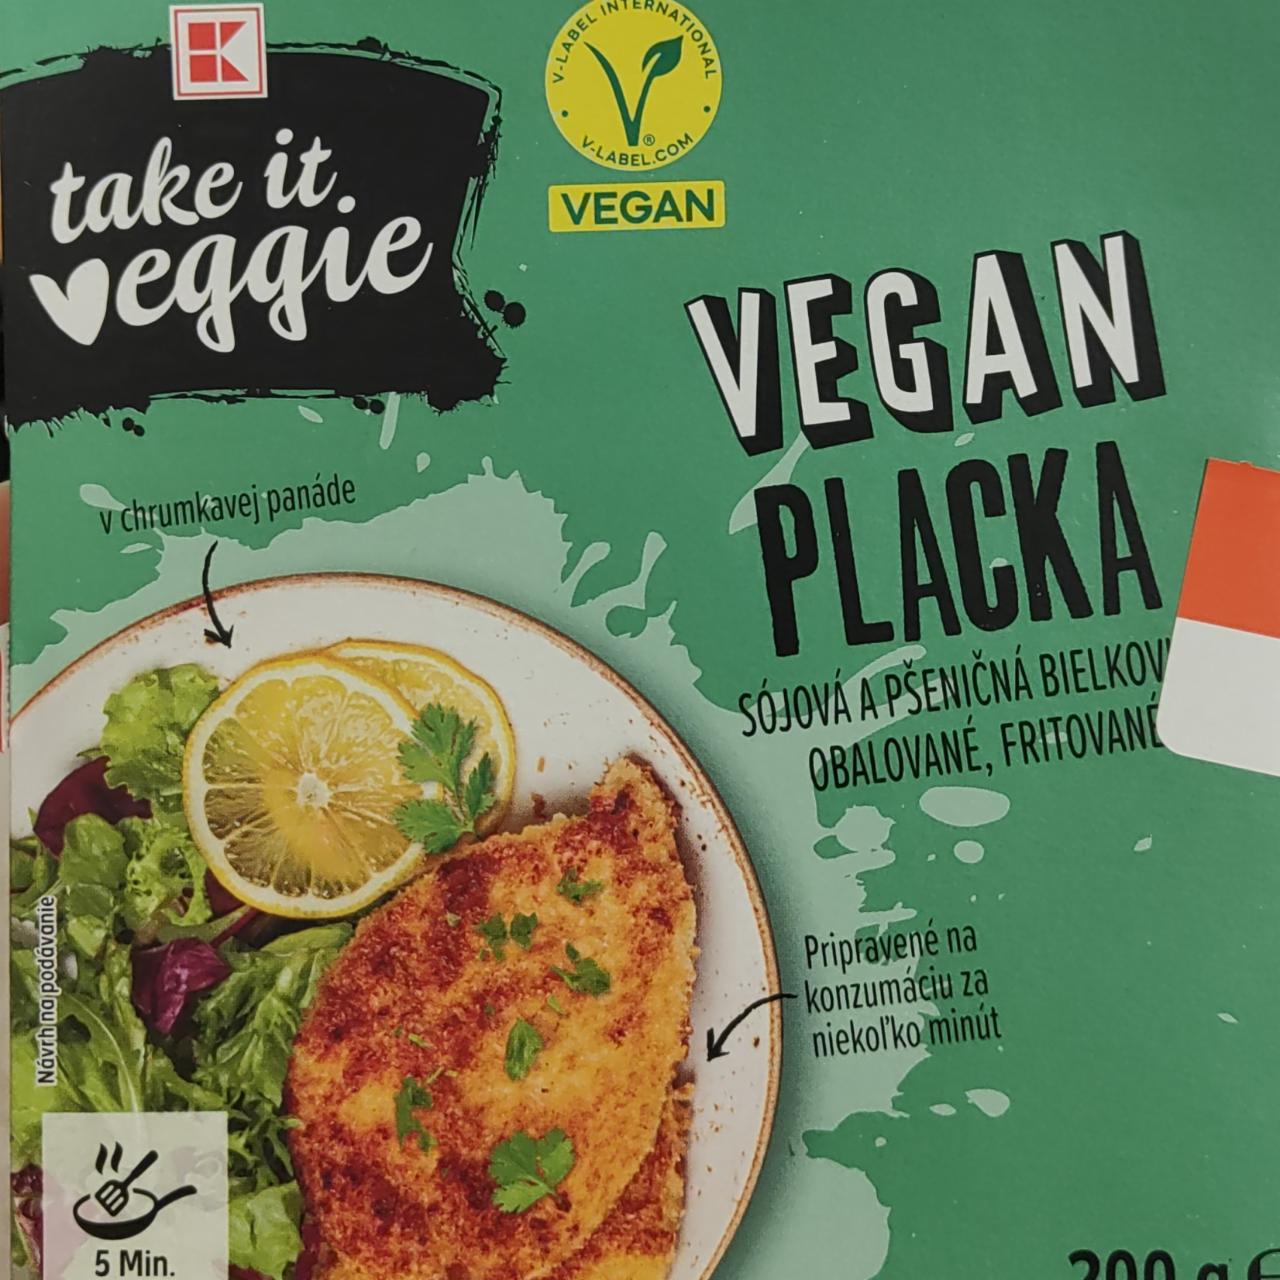 Фото - Vegan placka K-take it veggie